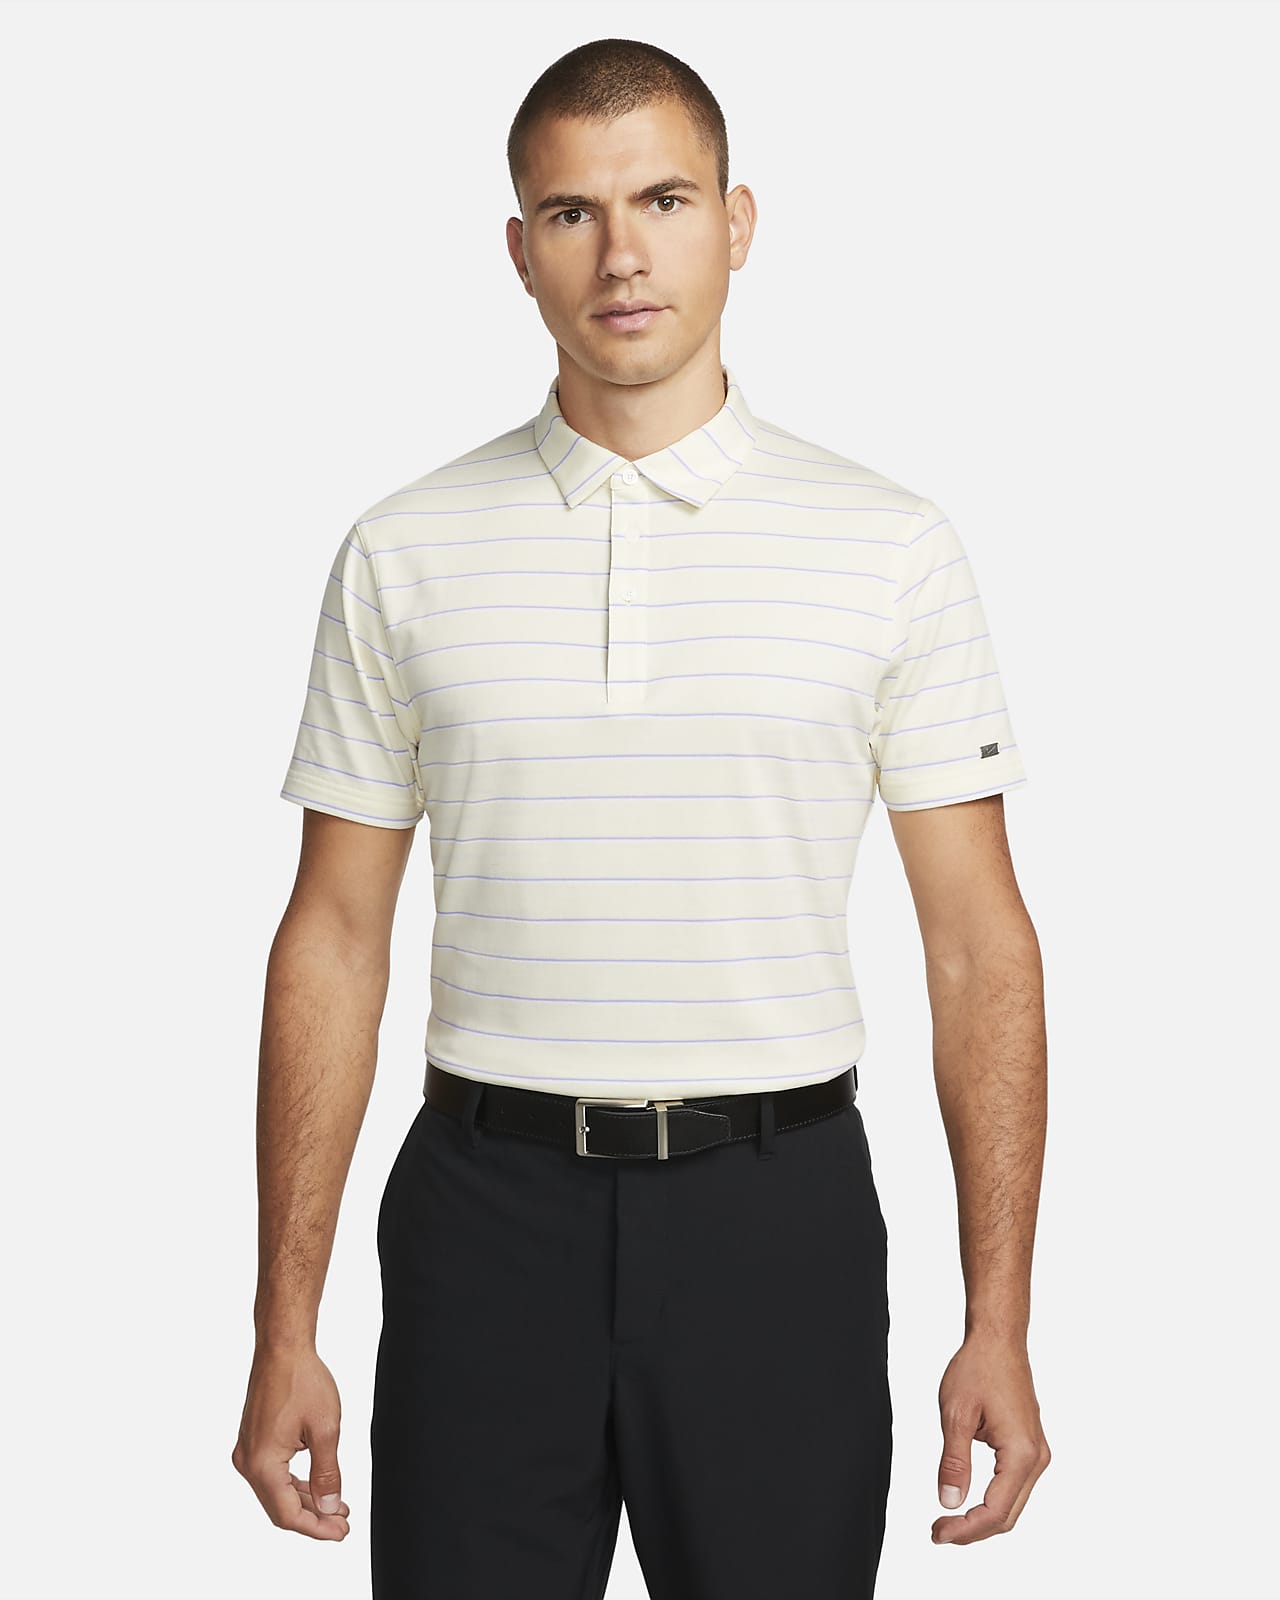 Nike Dri-FIT Player csíkos, galléros férfi golfpóló